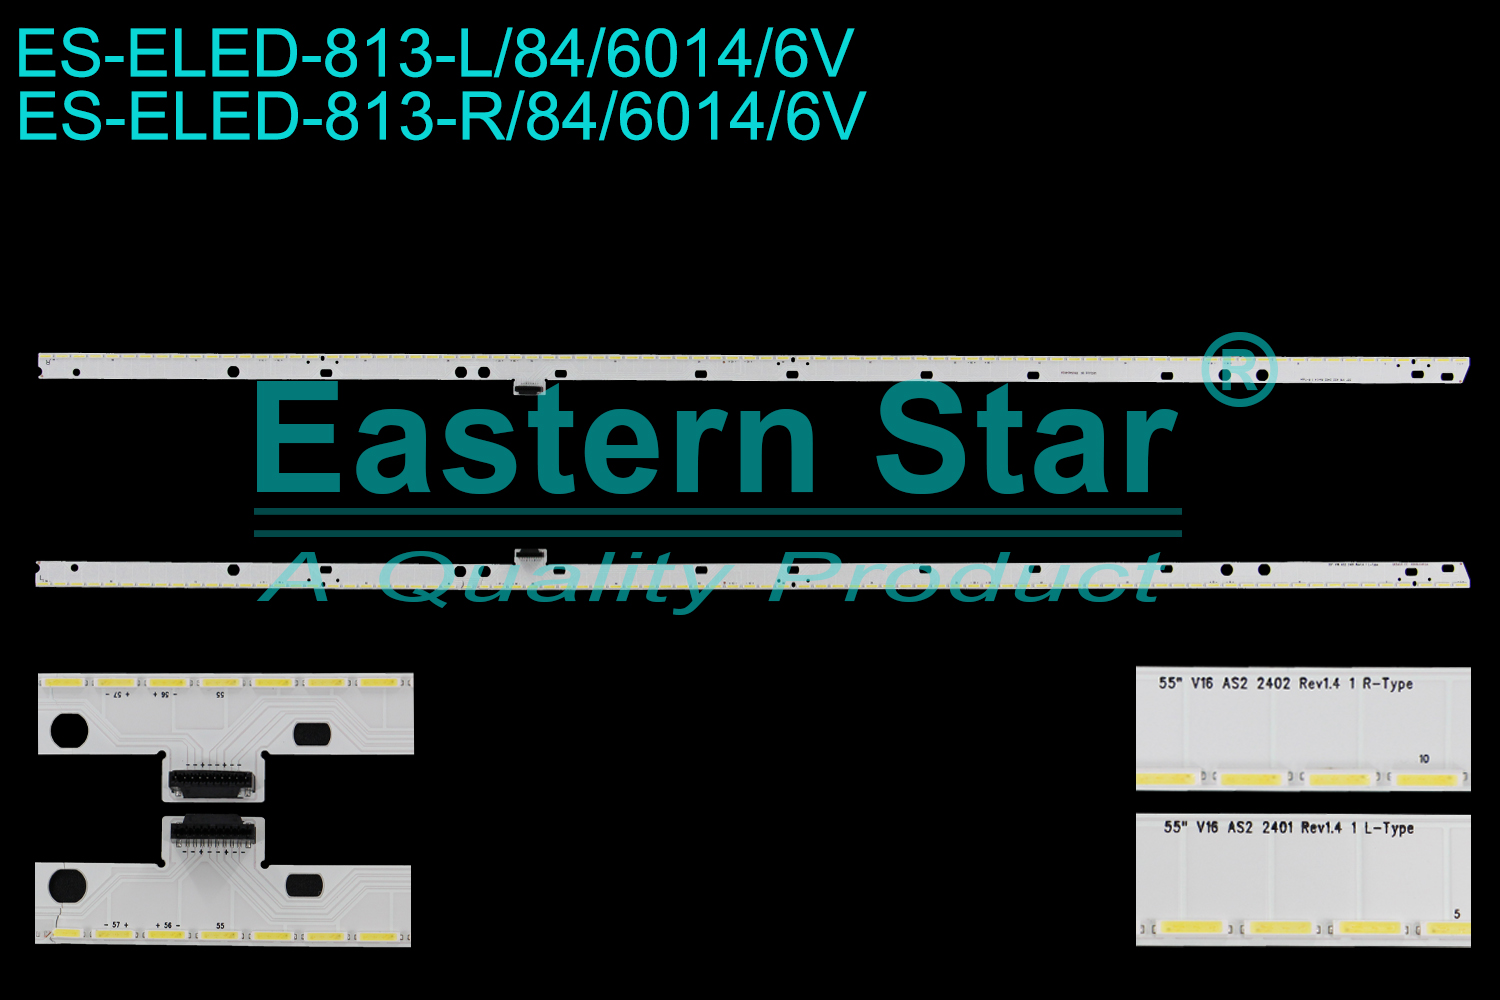 ES-ELED-813 ELED/EDGE TV backlight use for 55'' Lg 55UH950V R:55" V16 AS2 2402 Rev1.4 1 R-Type UK3418 CC 6916A2402A L:55" V16 AS2 2401 Rev1.4 1 L-Type UK3418 CC 6916L2401A  LED STRIPS(2)